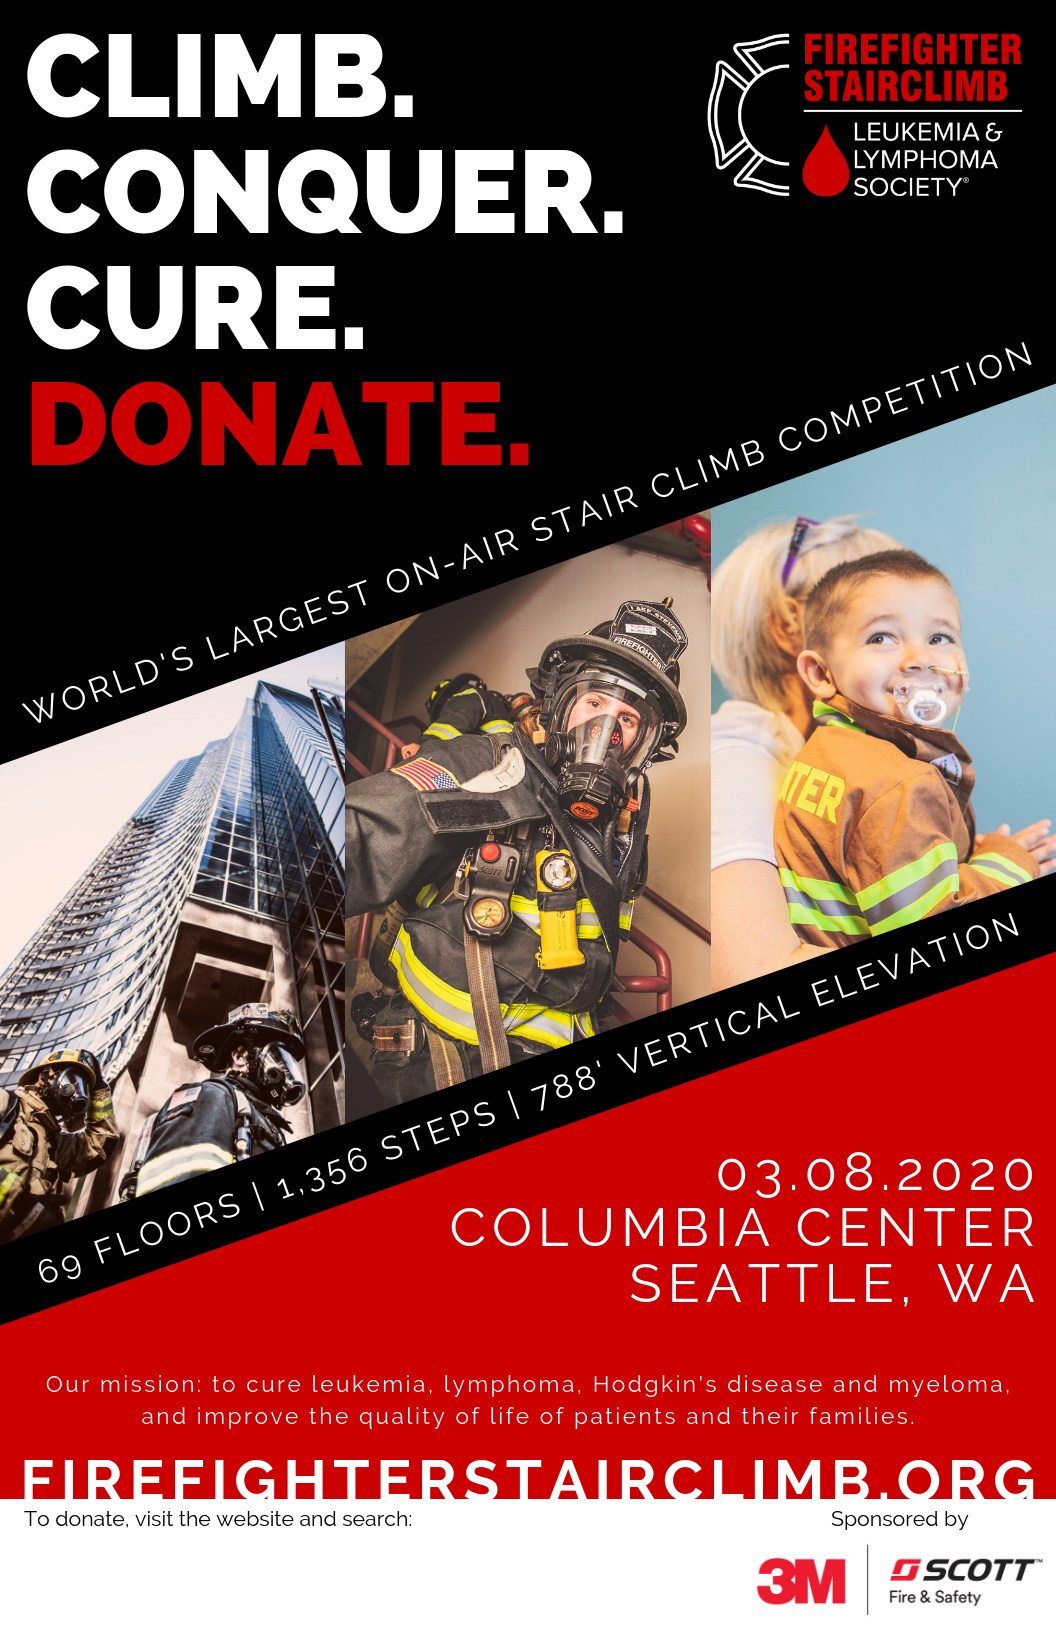 2020 Lls Firefighter Stairclimb Fundraising 101